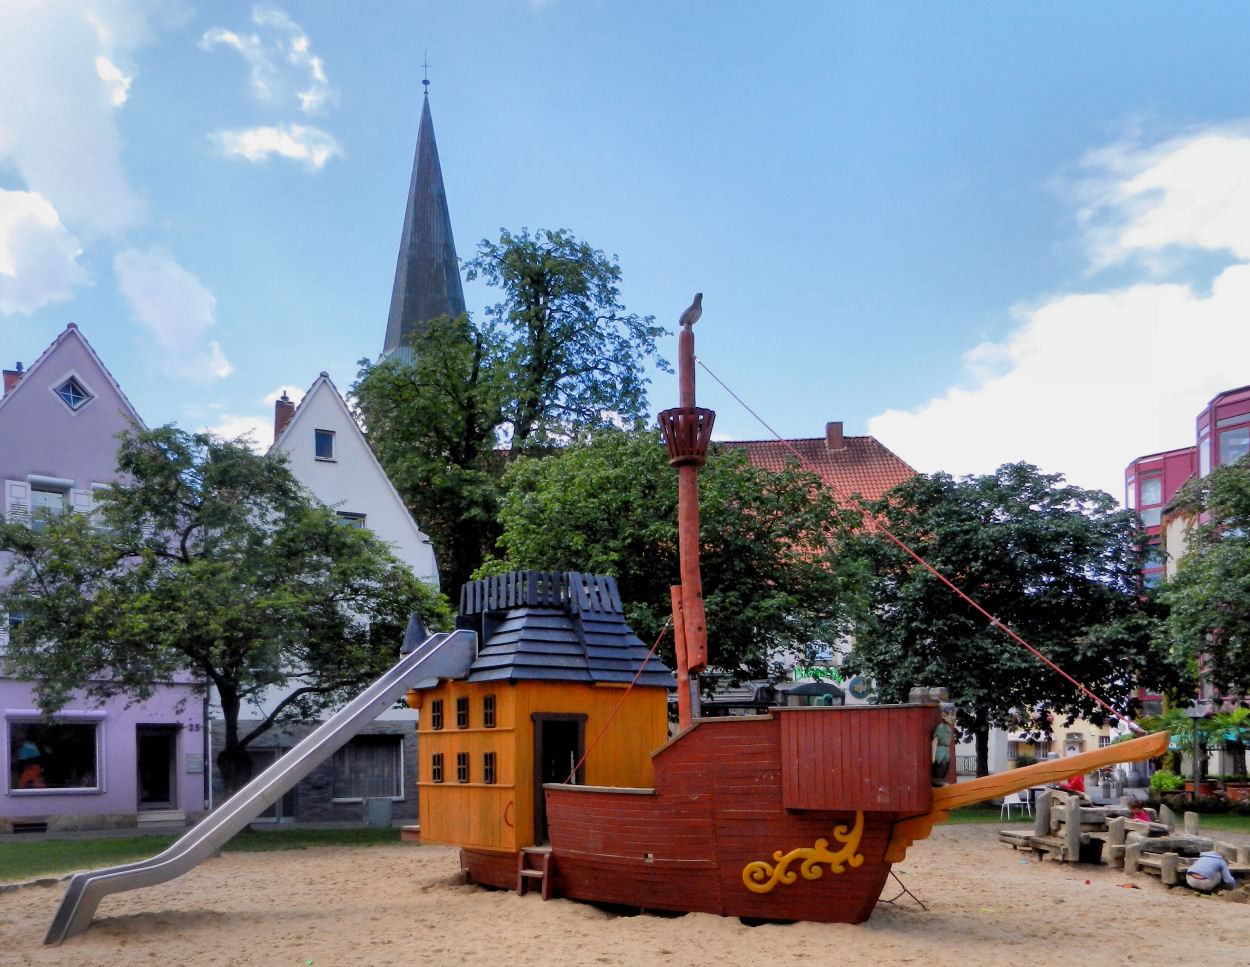 Abenteuerspielplatz in Osnabrück